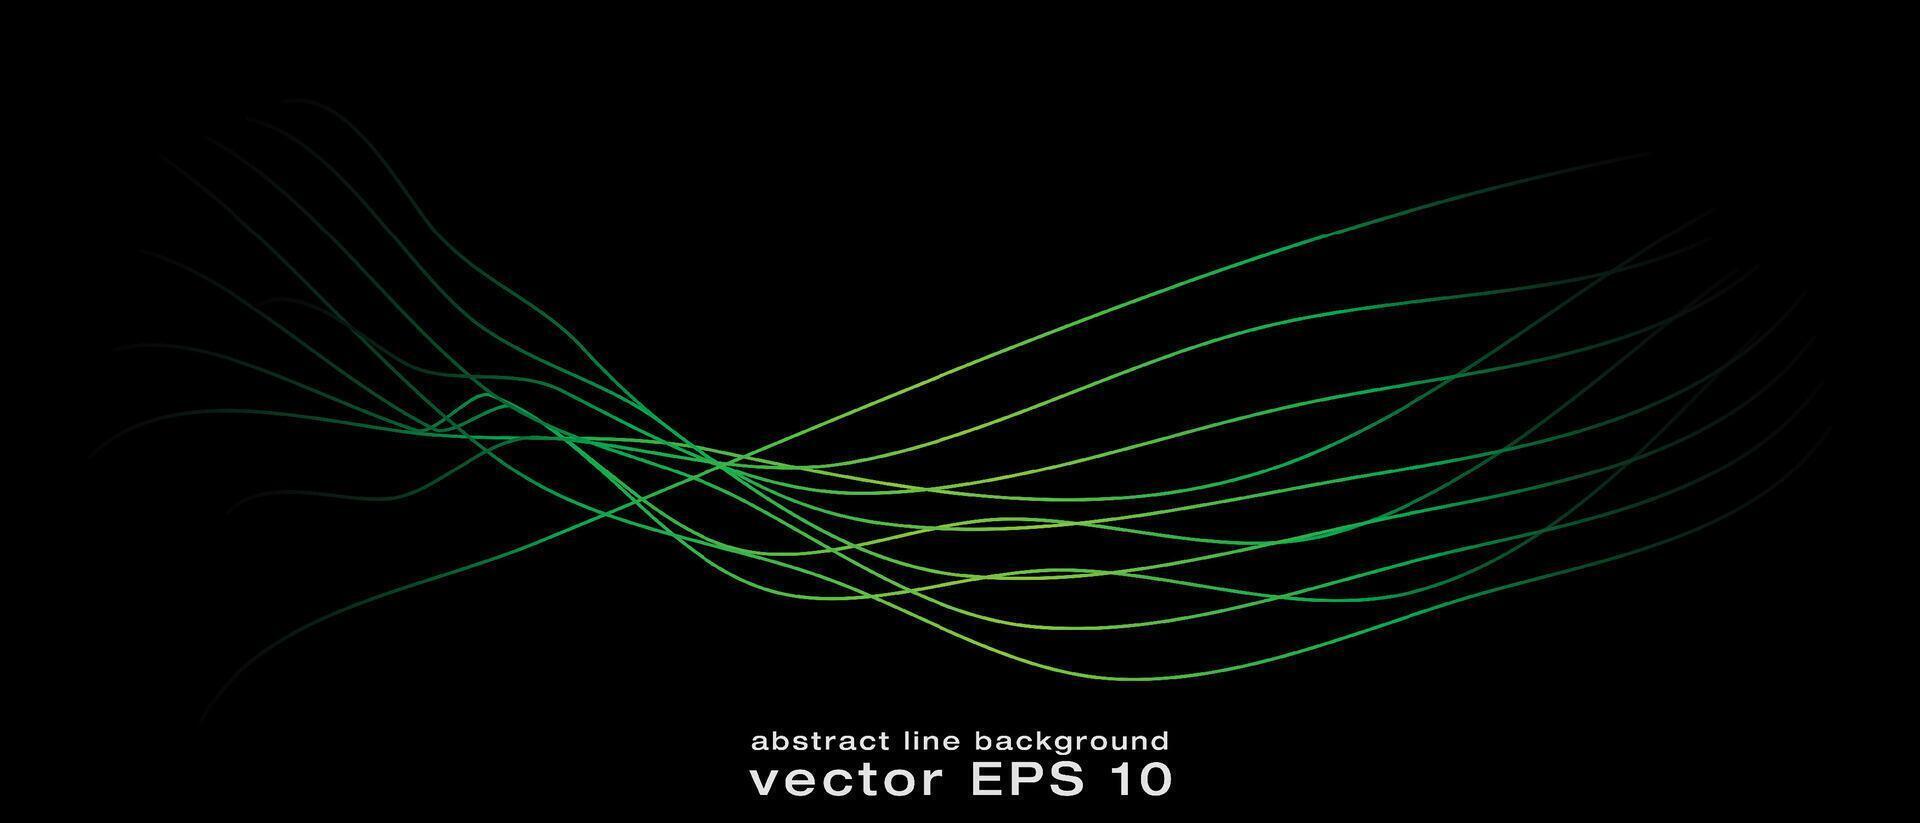 resumen ondulado dinámica azul verde Violeta ligero líneas curva bandera en negro antecedentes en concepto tecnología, neural red, neurología, ciencia, música, neón ligero vector